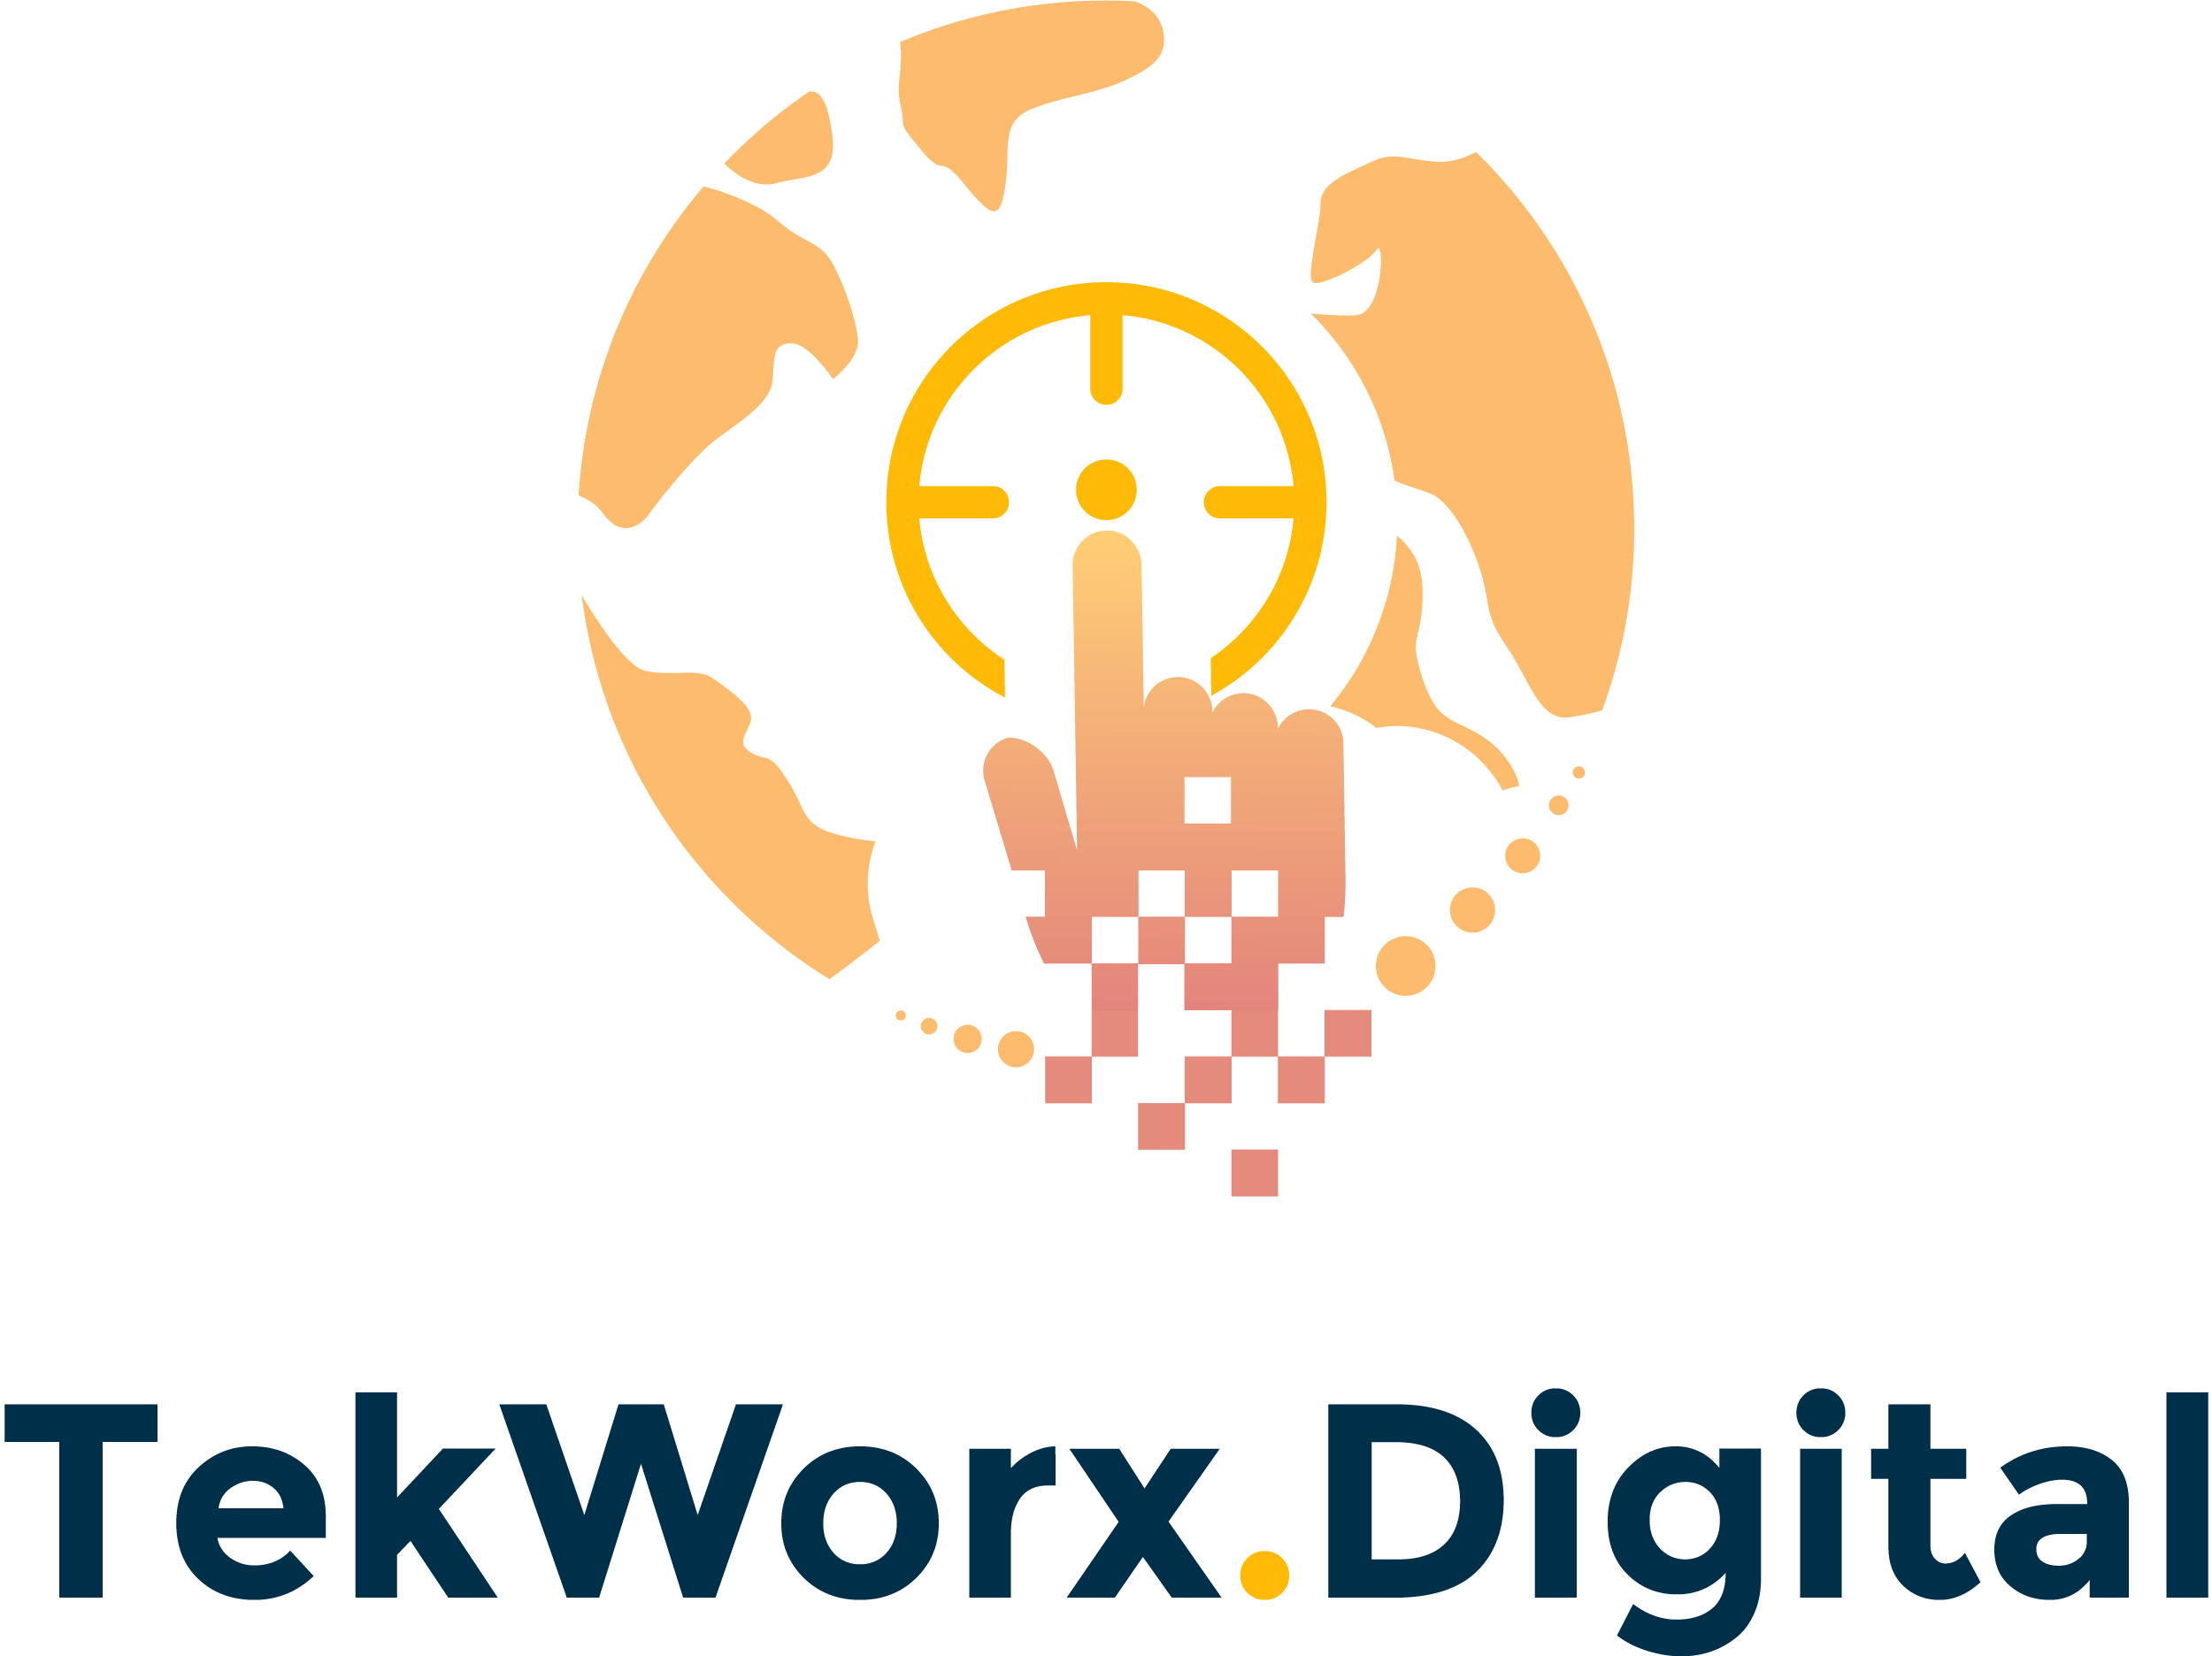 TekWorx.Digital